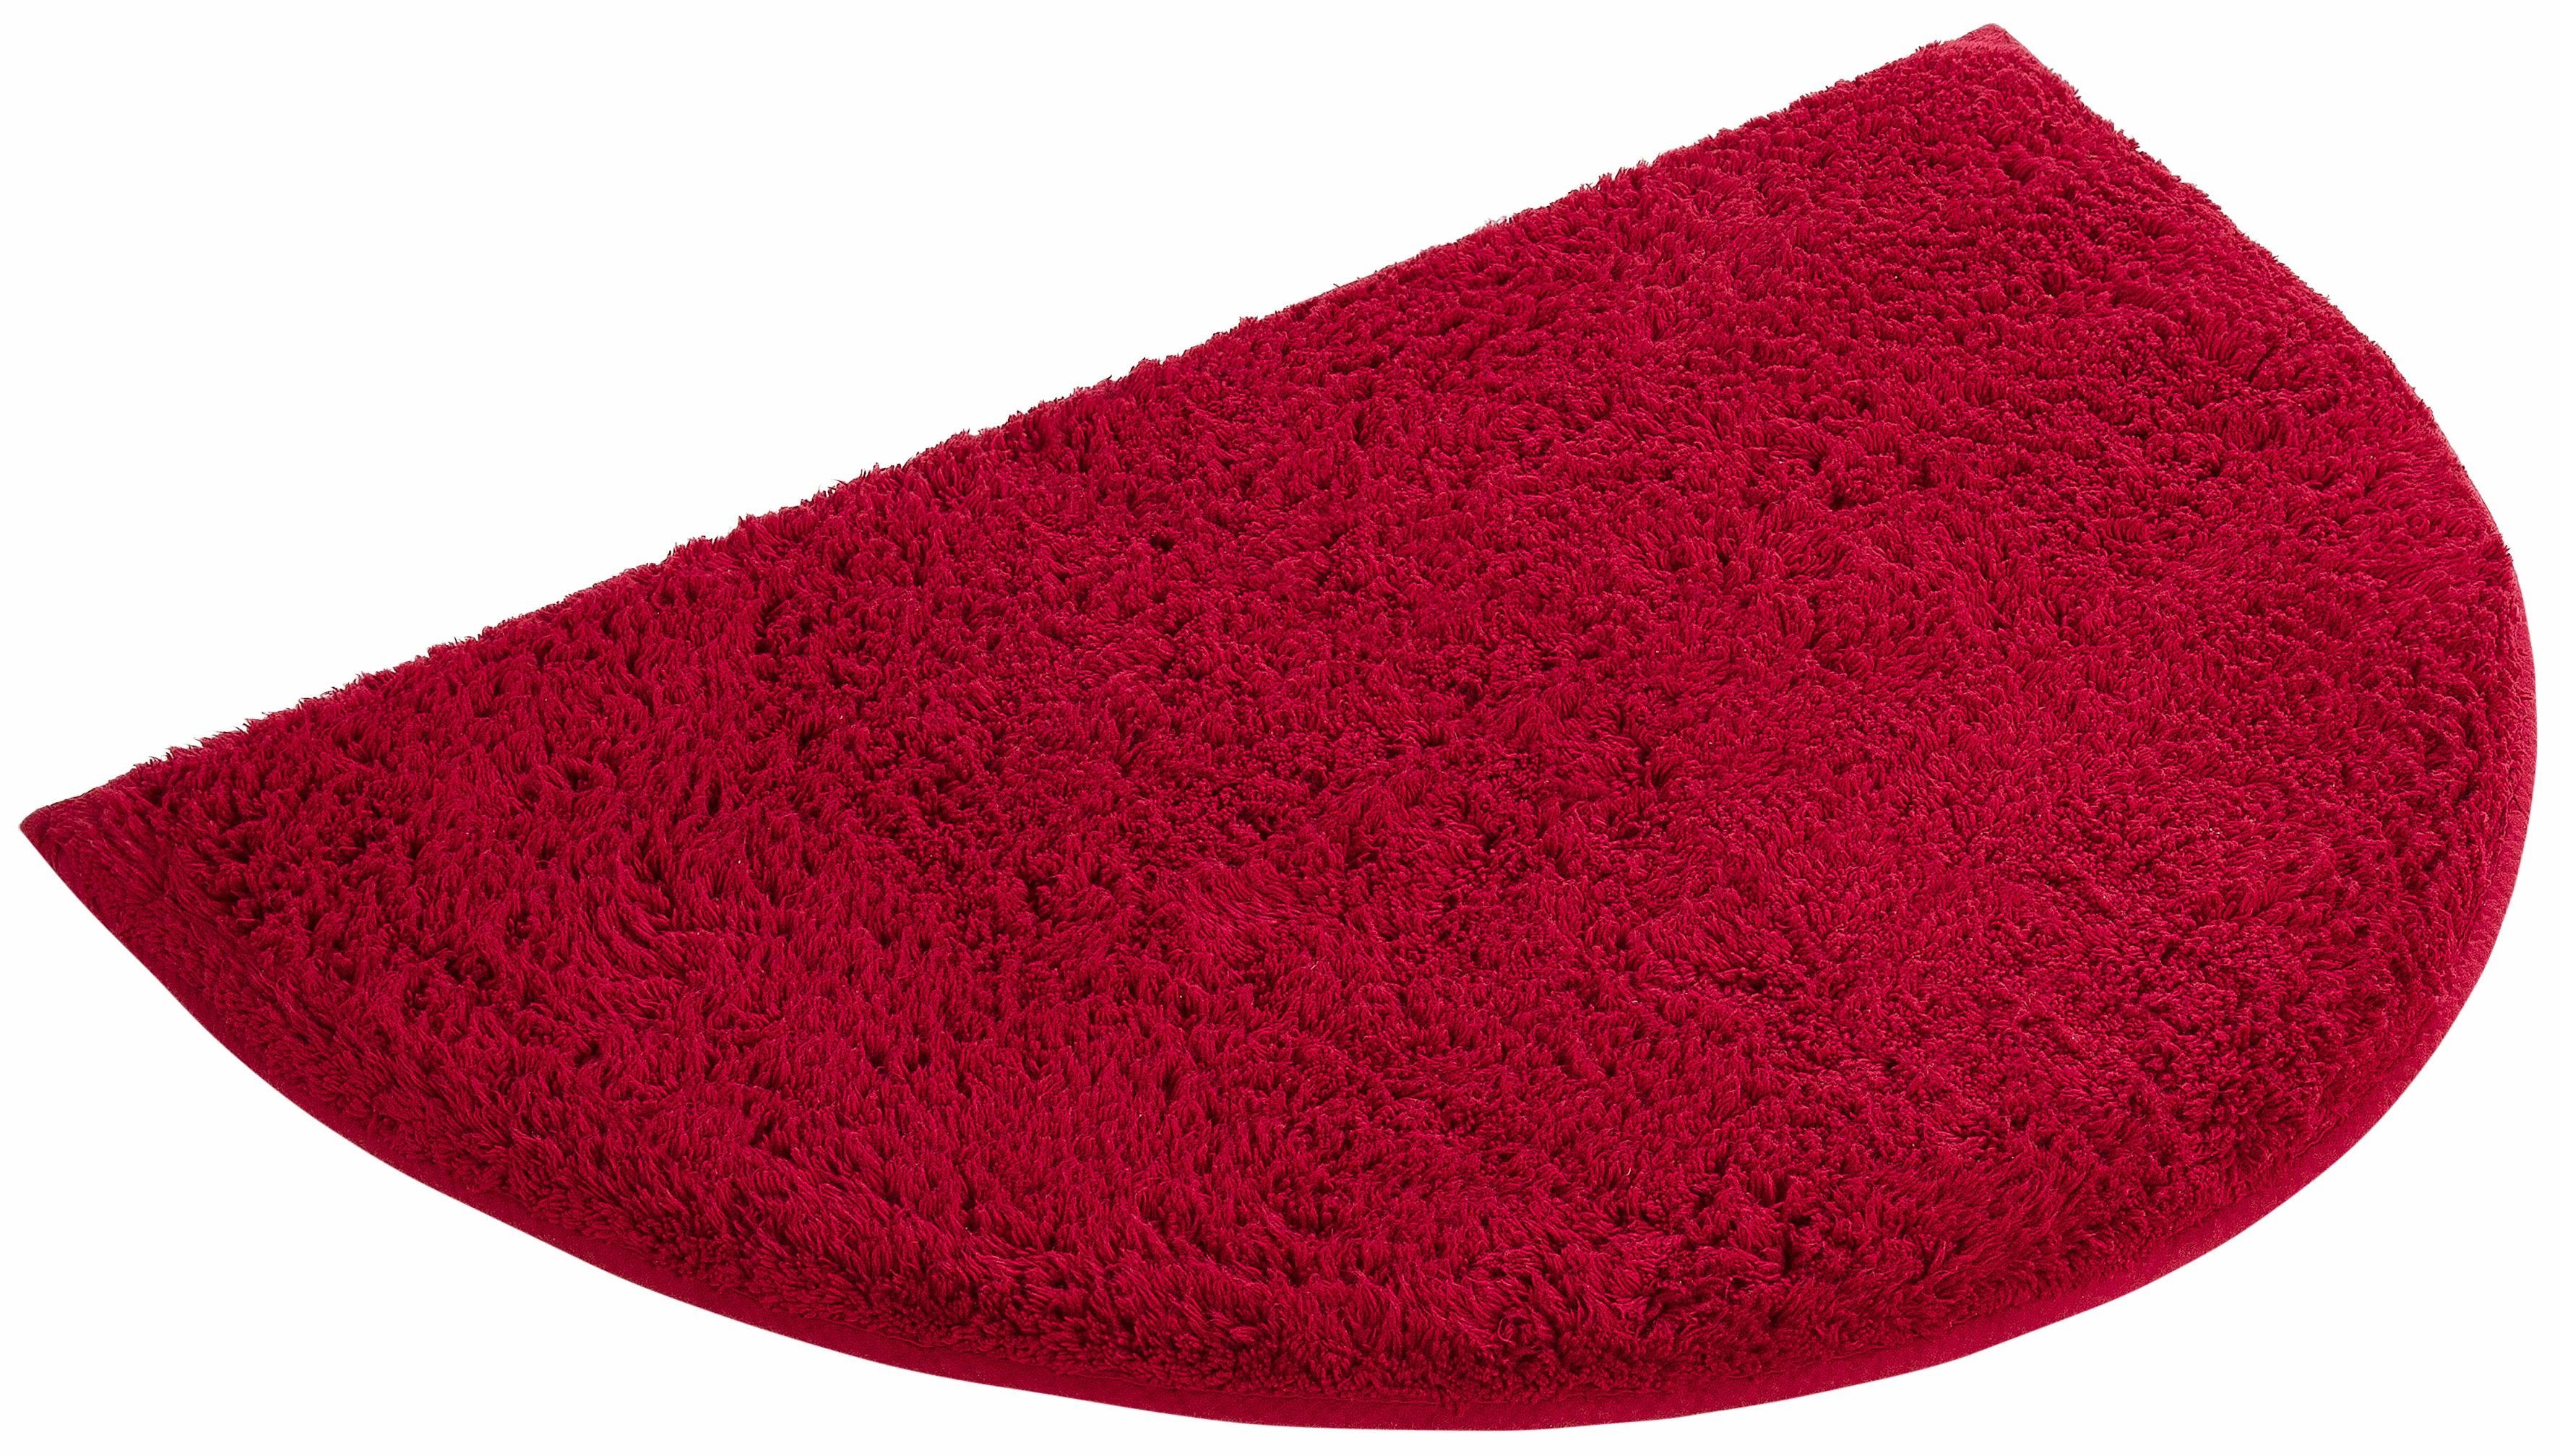 Badematte Maren Home affaire, Höhe 15 mm, rutschhemmend beschichtet, fußbodenheizungsgeeignet, Baumwolle (Bio-Baumwolle), halbrund, Bio-Baumwolle, Badteppich, Badematten auch als 3 teiliges Set rot